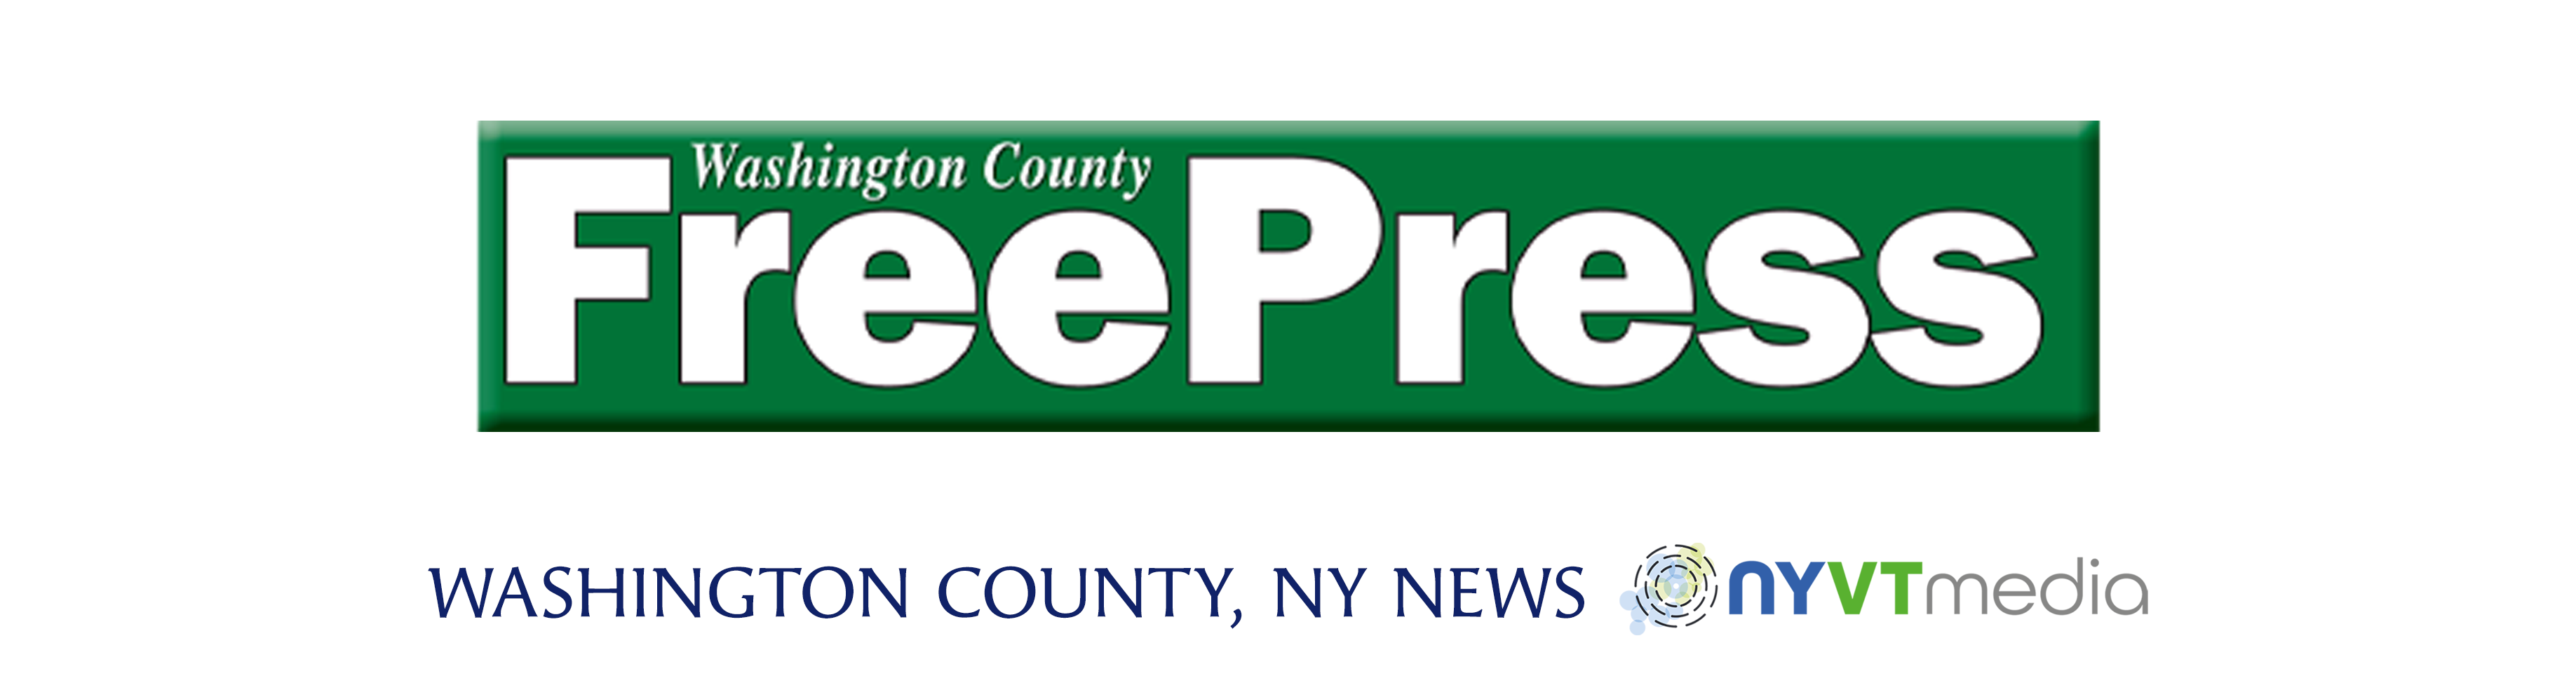 Washington County New York News